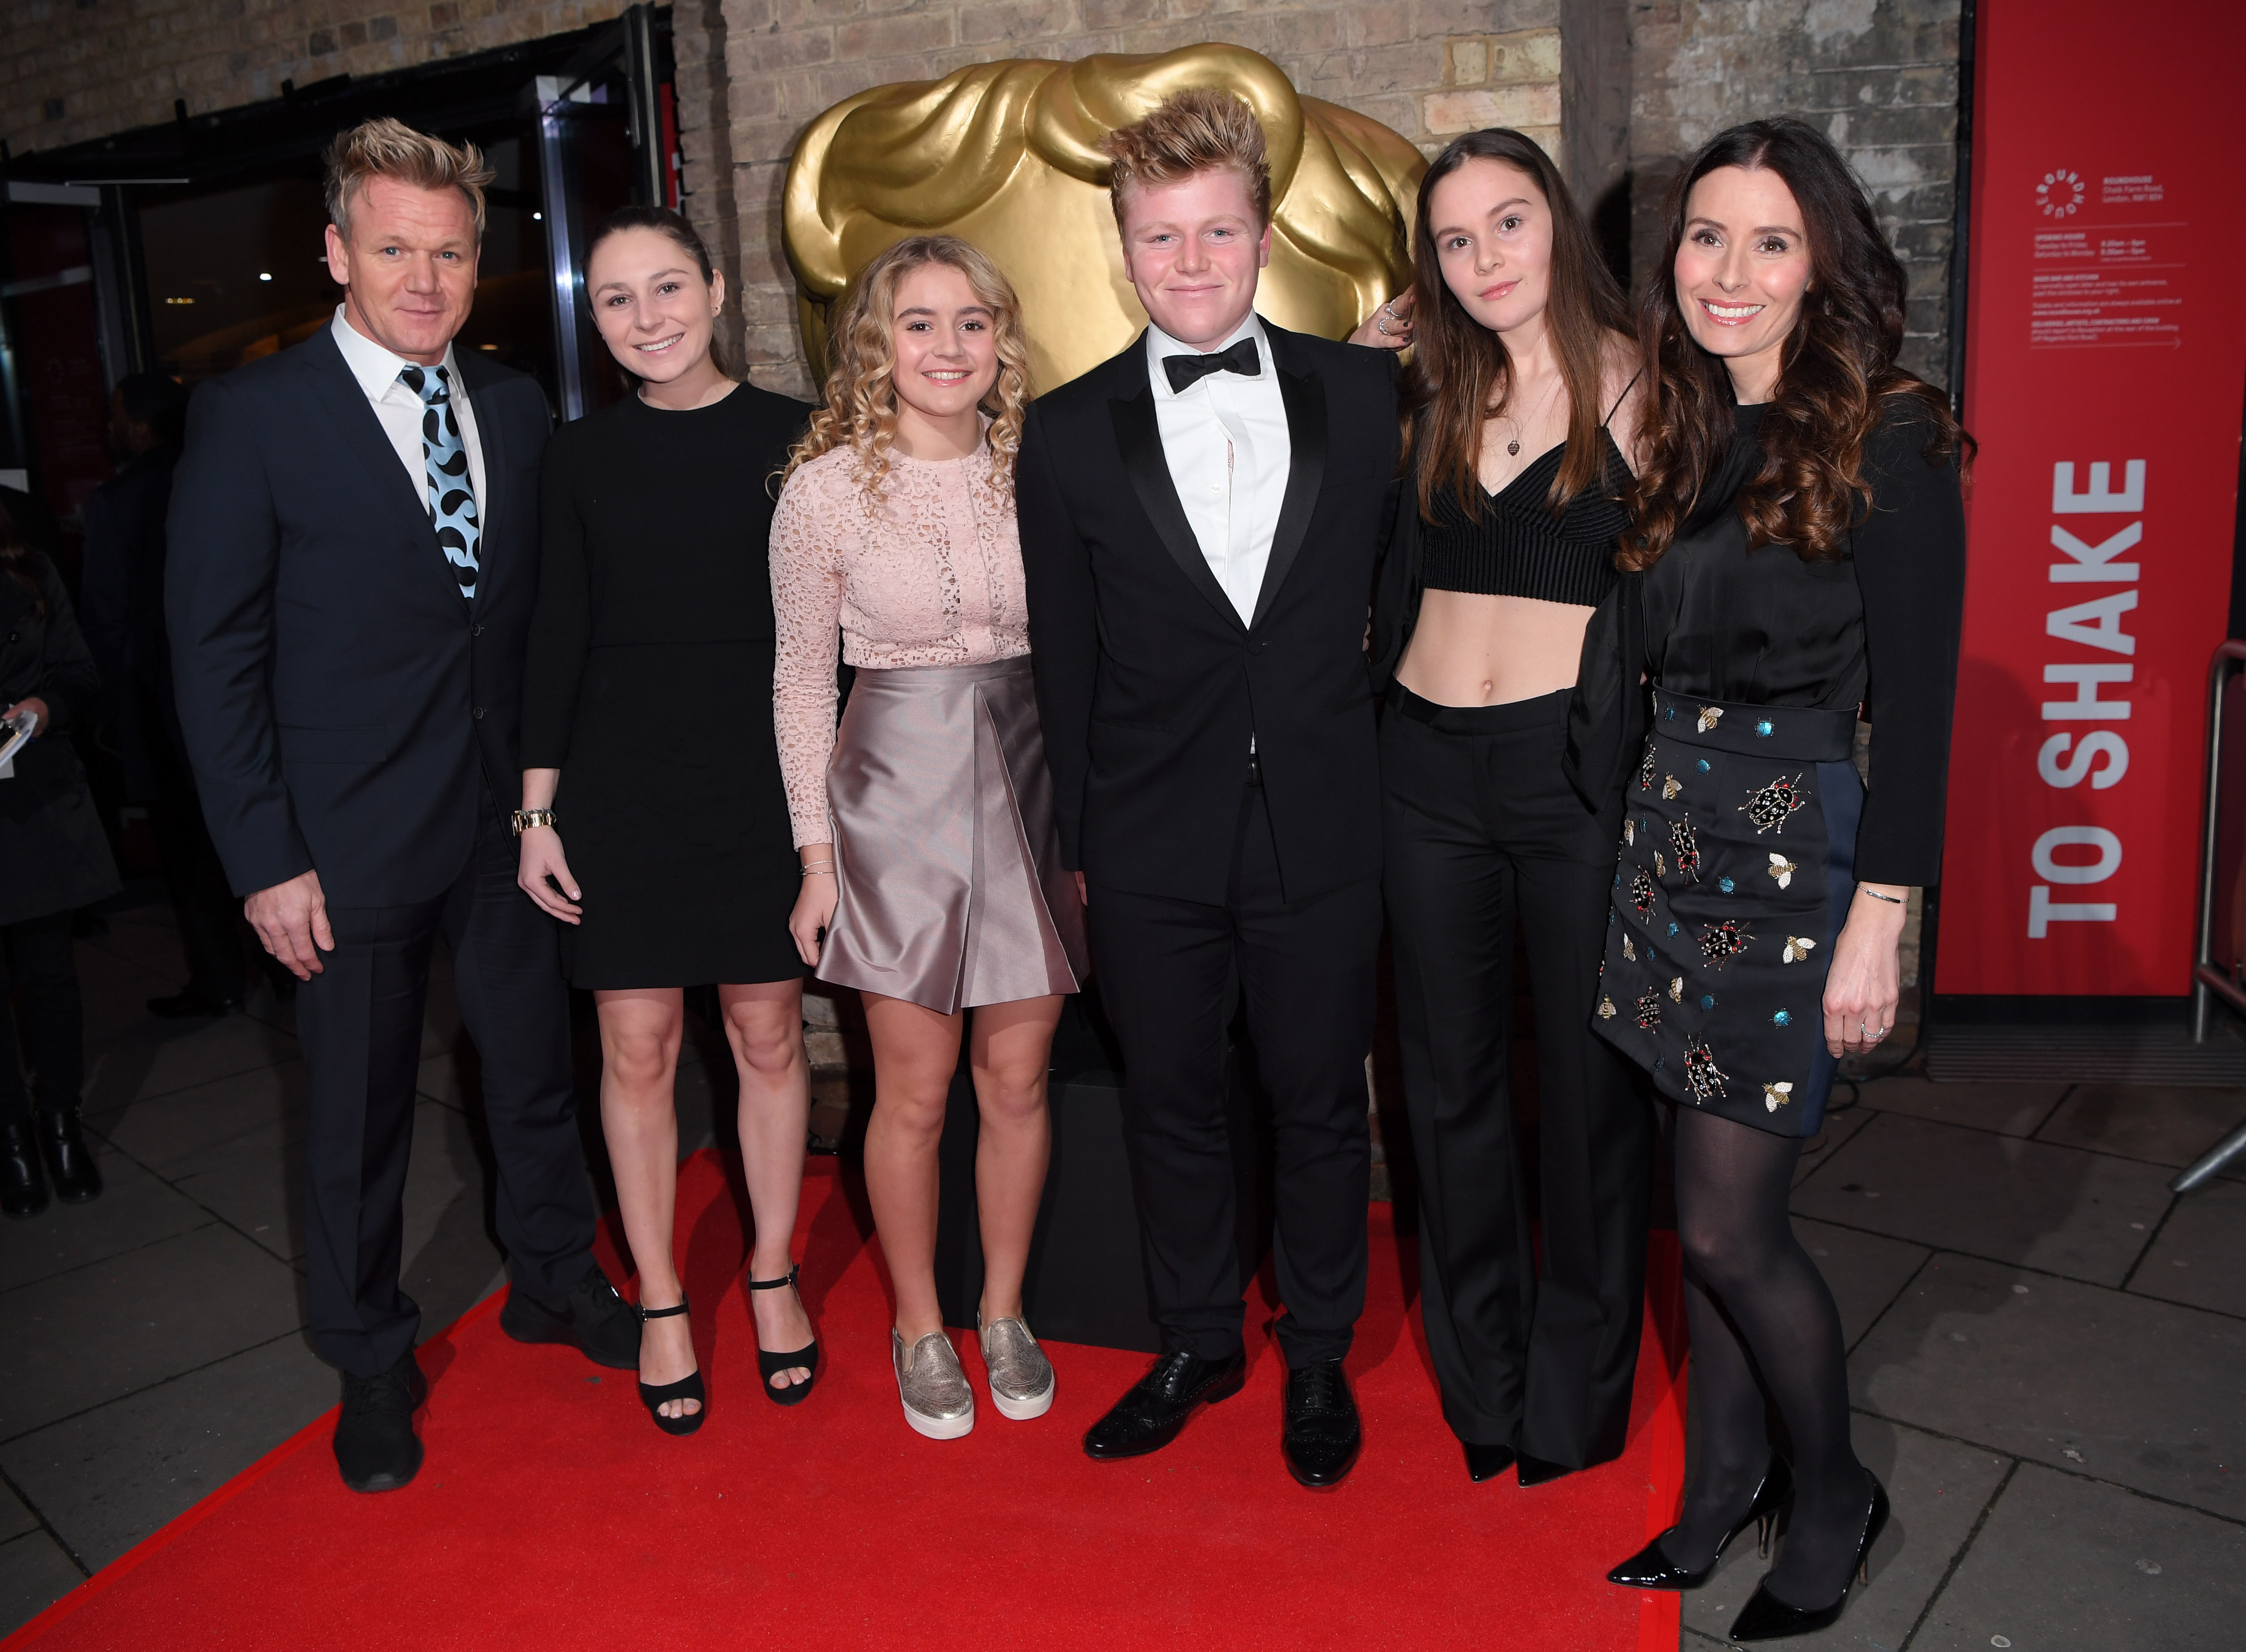 Gordon, Holly, Matilda, Jack, Megan, and Tana Ramsay at the BAFTA Children's Awards in London, England on November 20, 2016 | Source: Getty Images